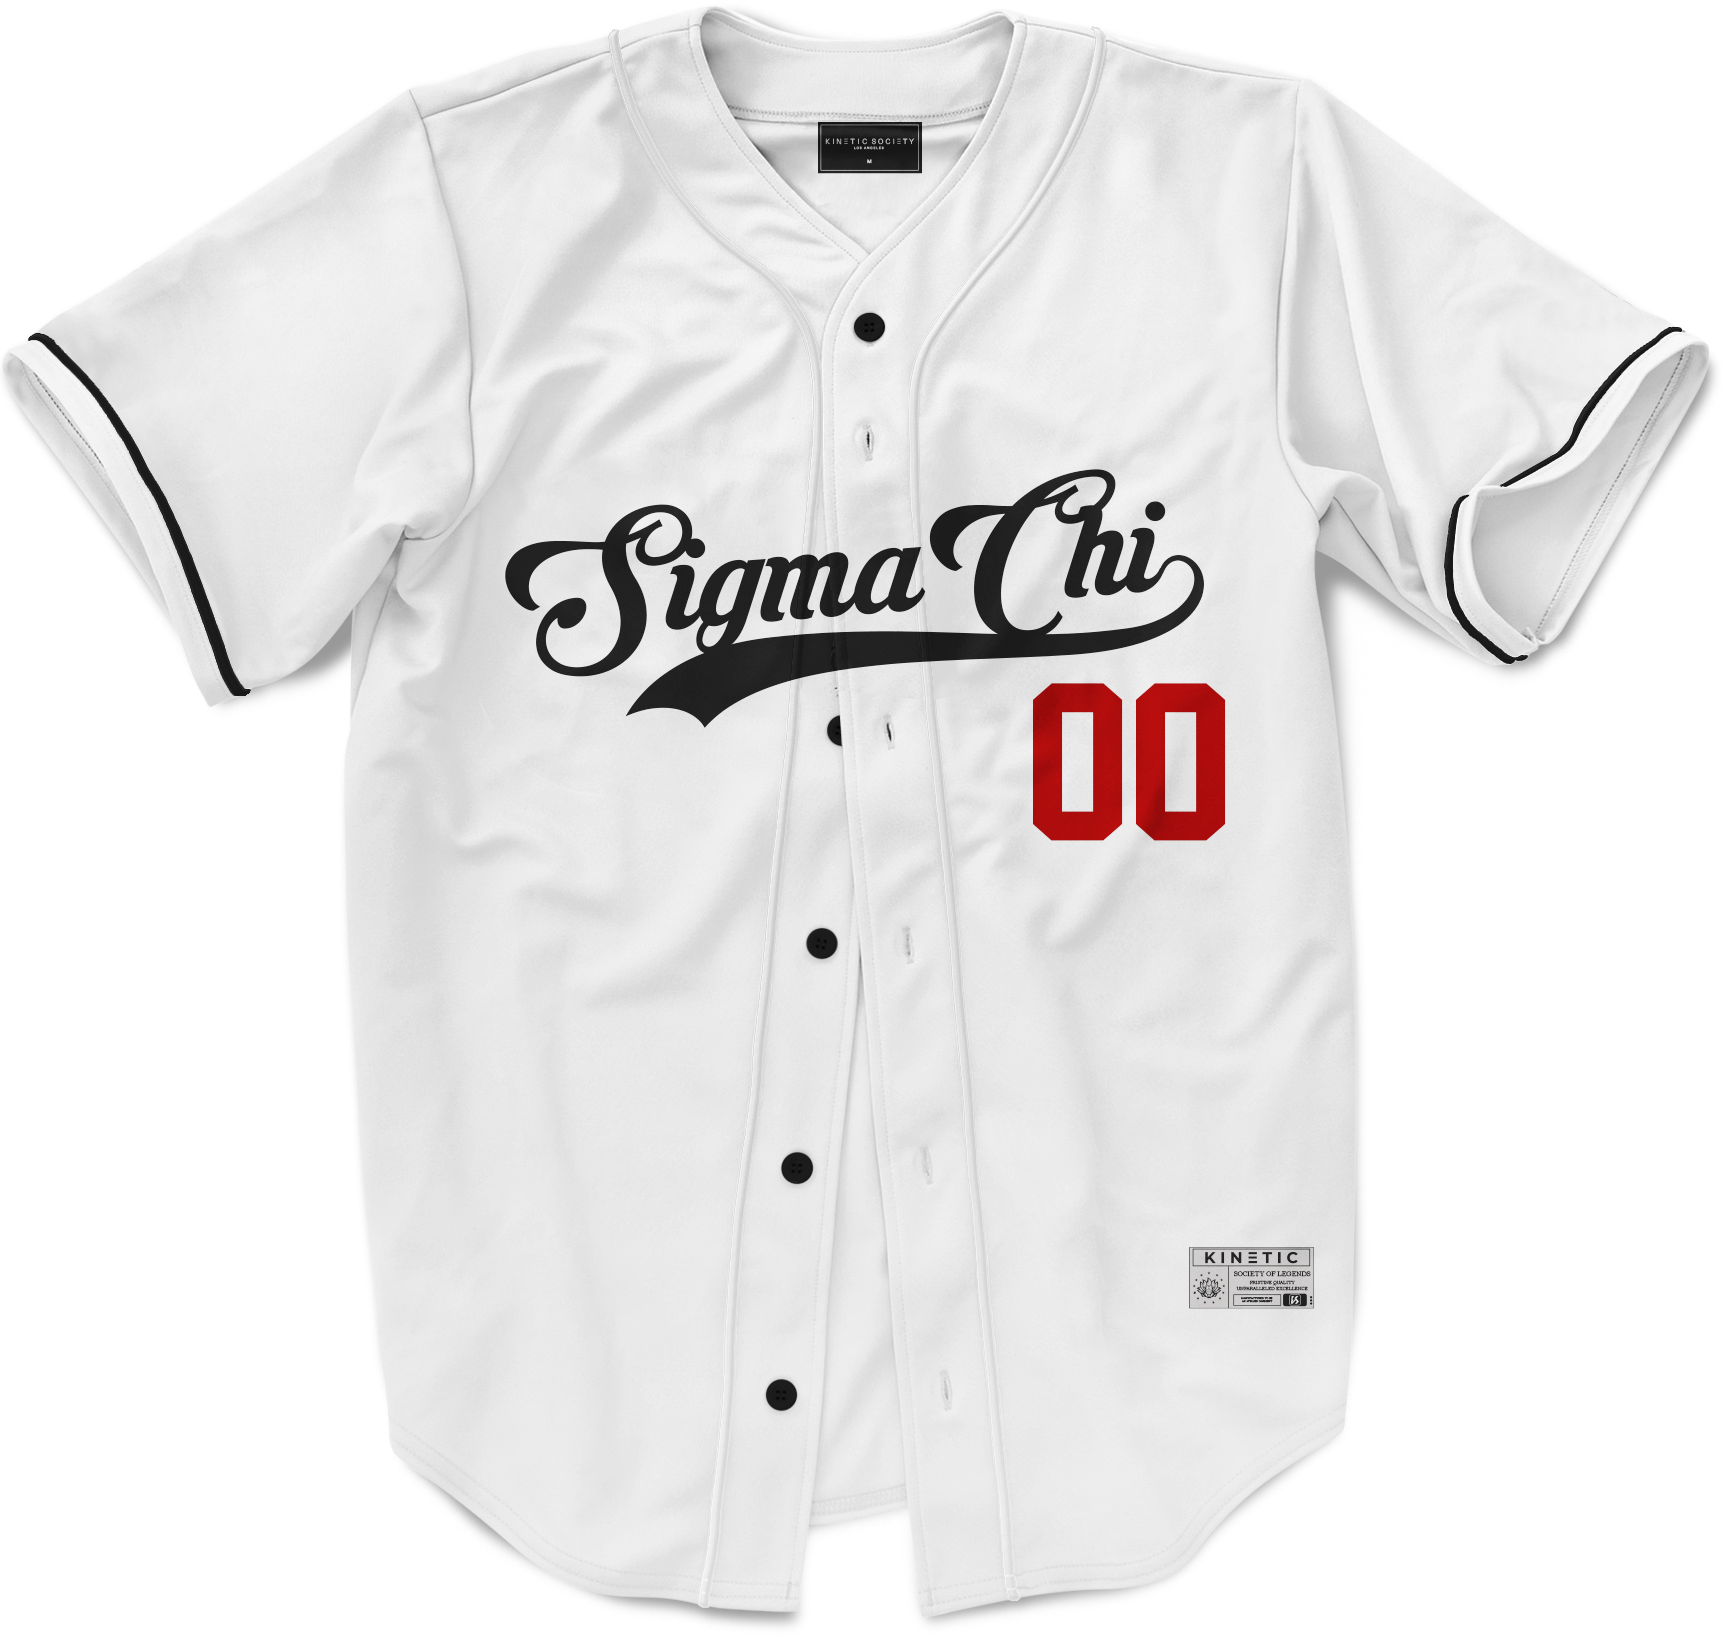 Sigma Chi - Classic Ballpark Red Baseball Jersey